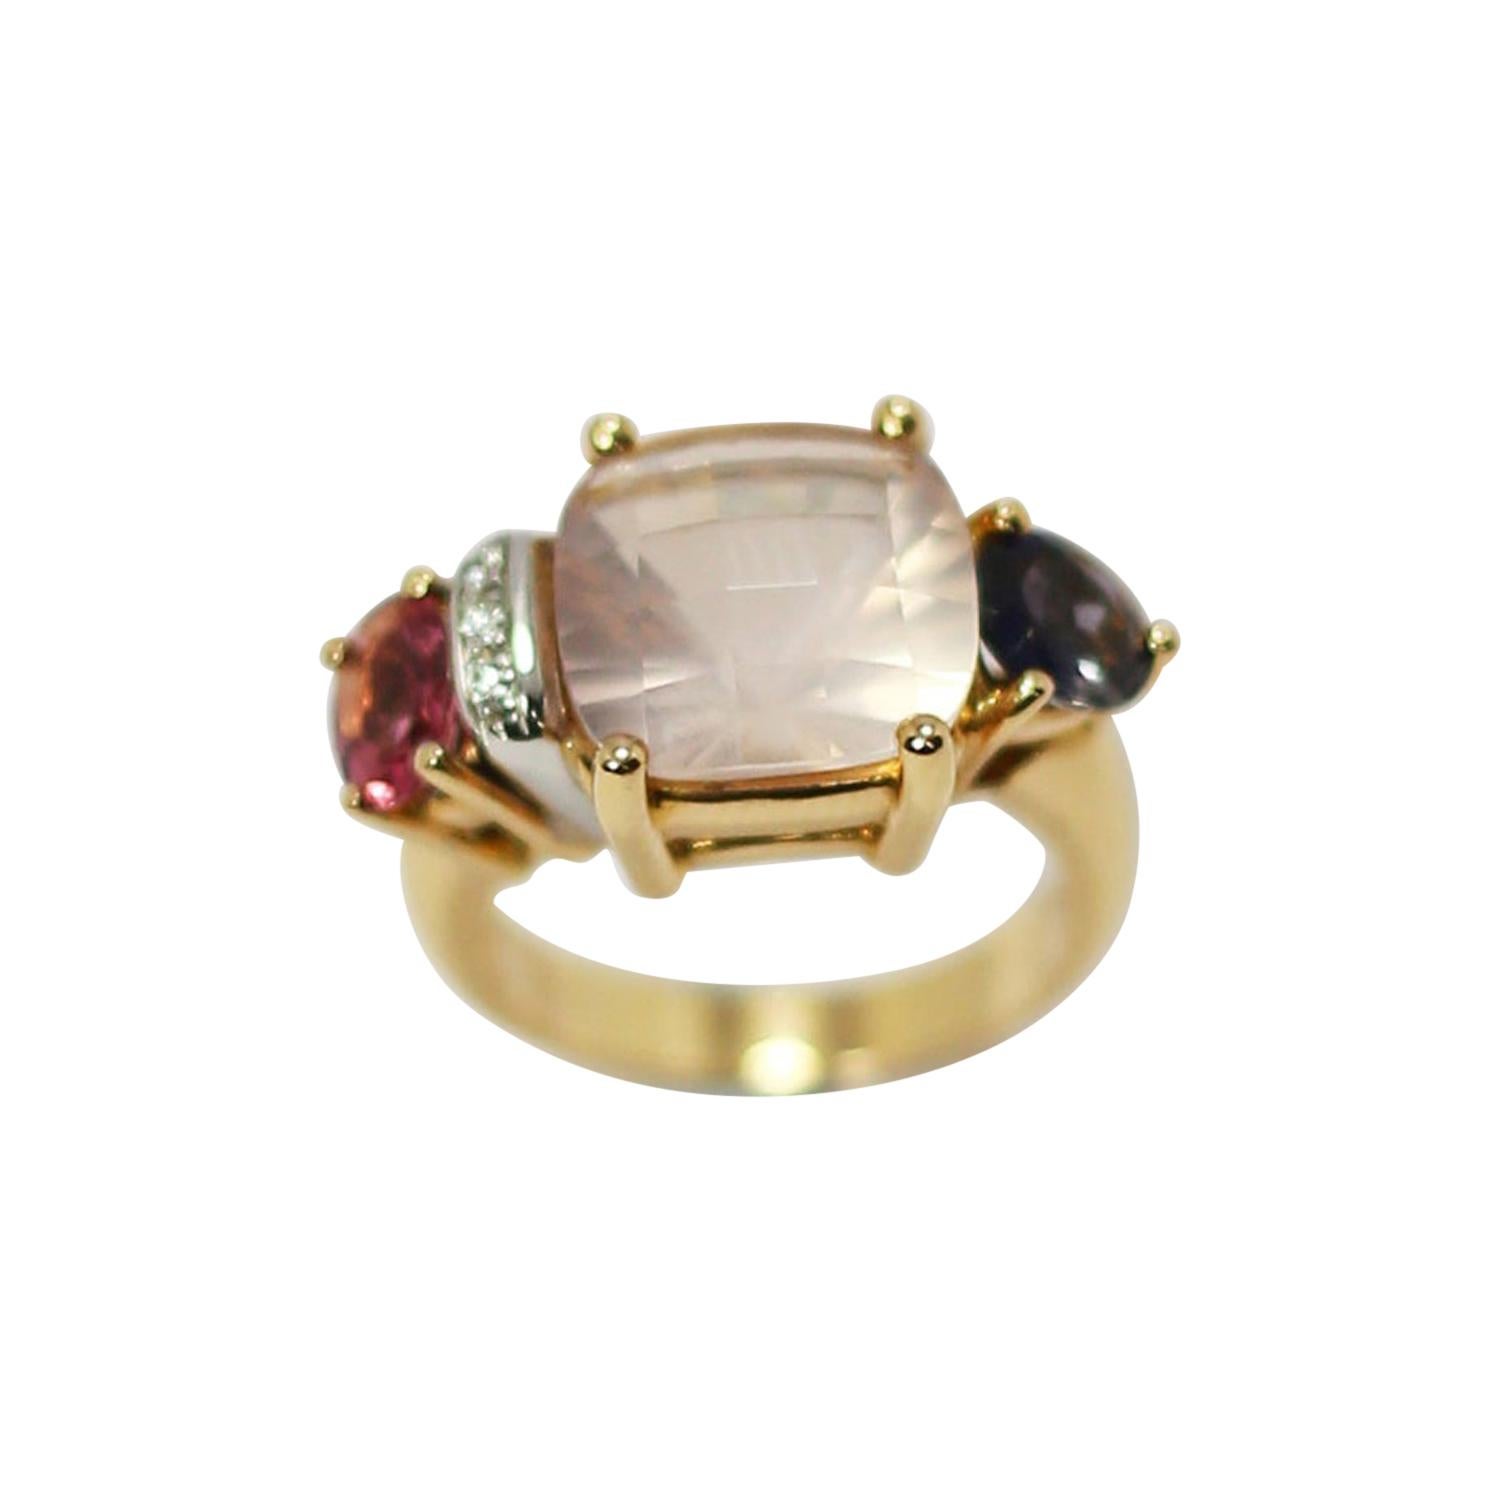 Mangiarotti Moonstone, Sapphire, Pink Tourmaline Ring in 18kt Gold and Diamonds